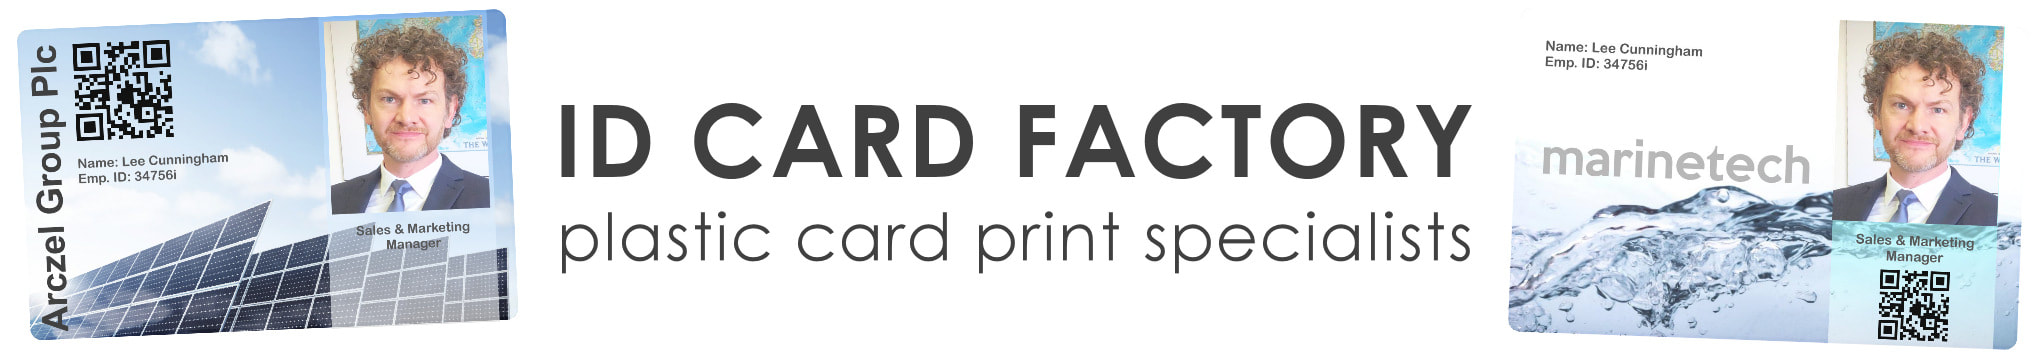 Cambridge ID card printing | staff photo ID cards | company employee ID card print service | Local Identity Card Printing | Custom Design 